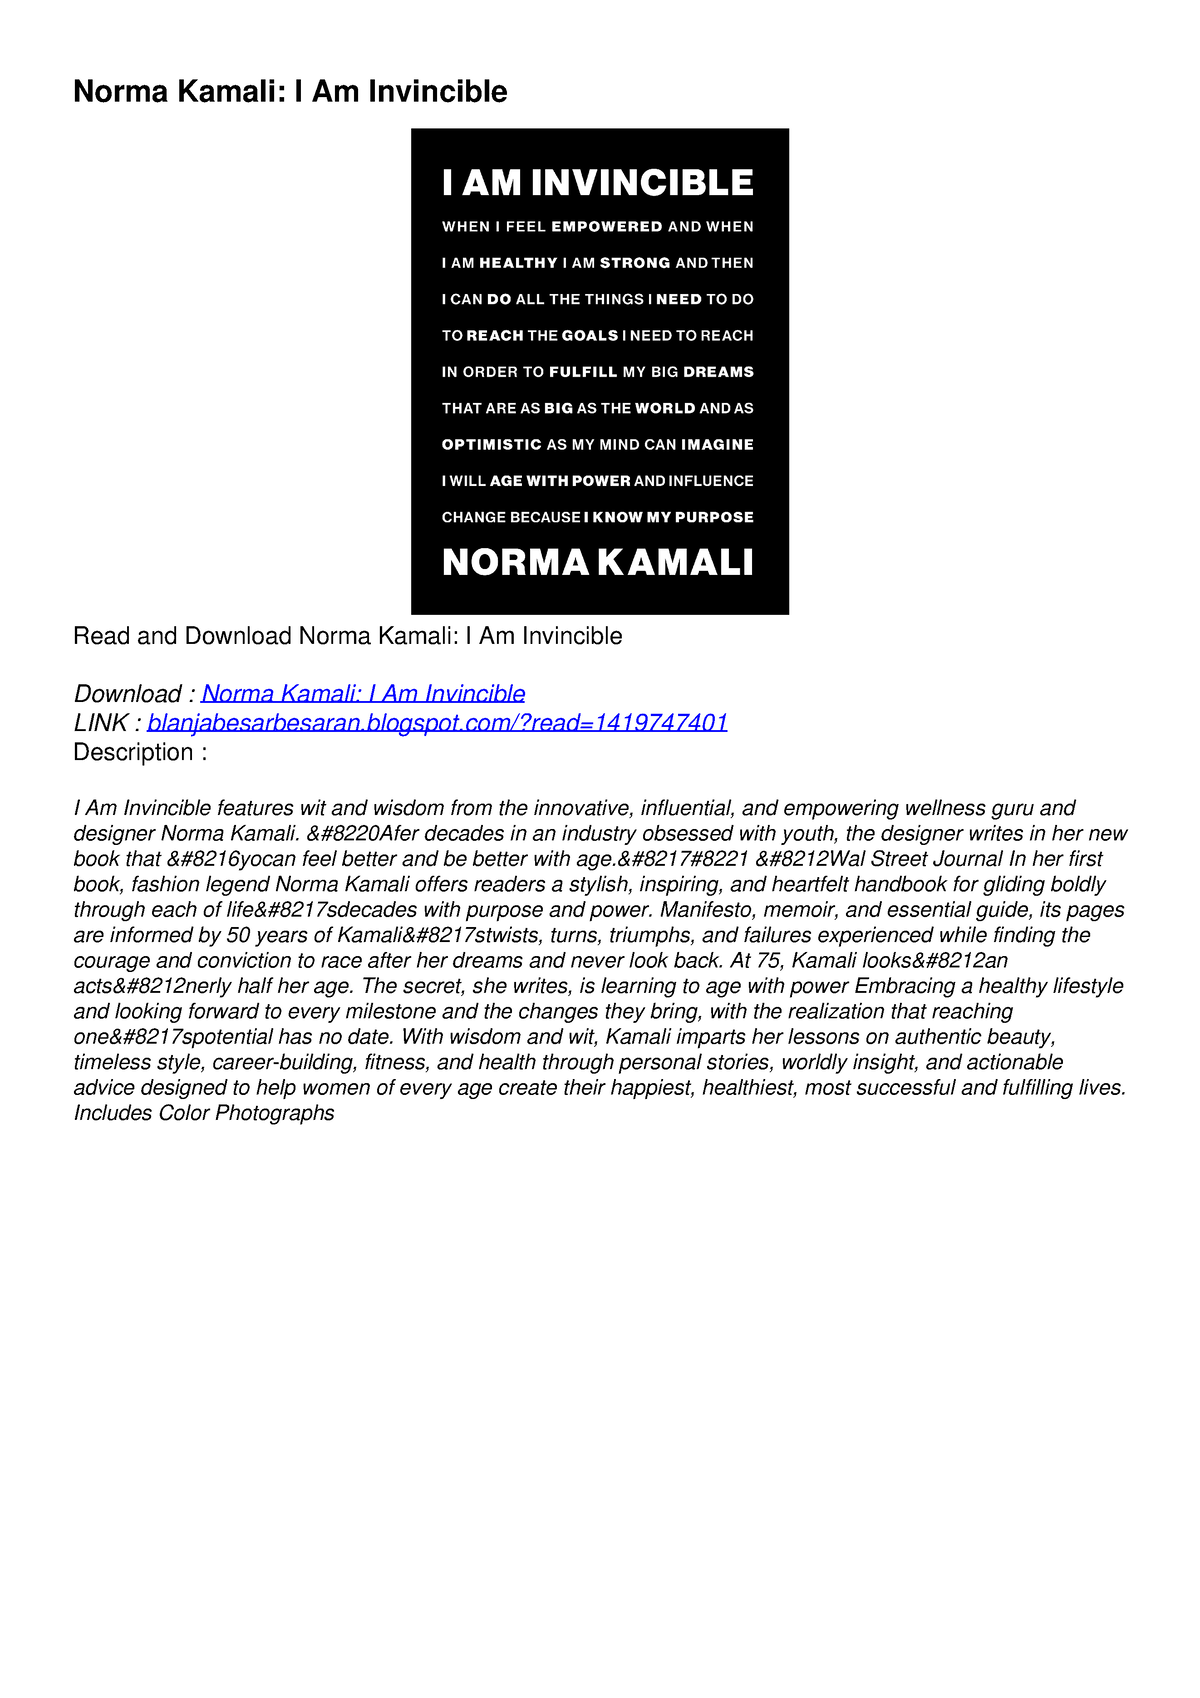 (PDF/DOWNLOAD) Norma Kamali: I Am Invincible free - Norma Kamali: I Am ...